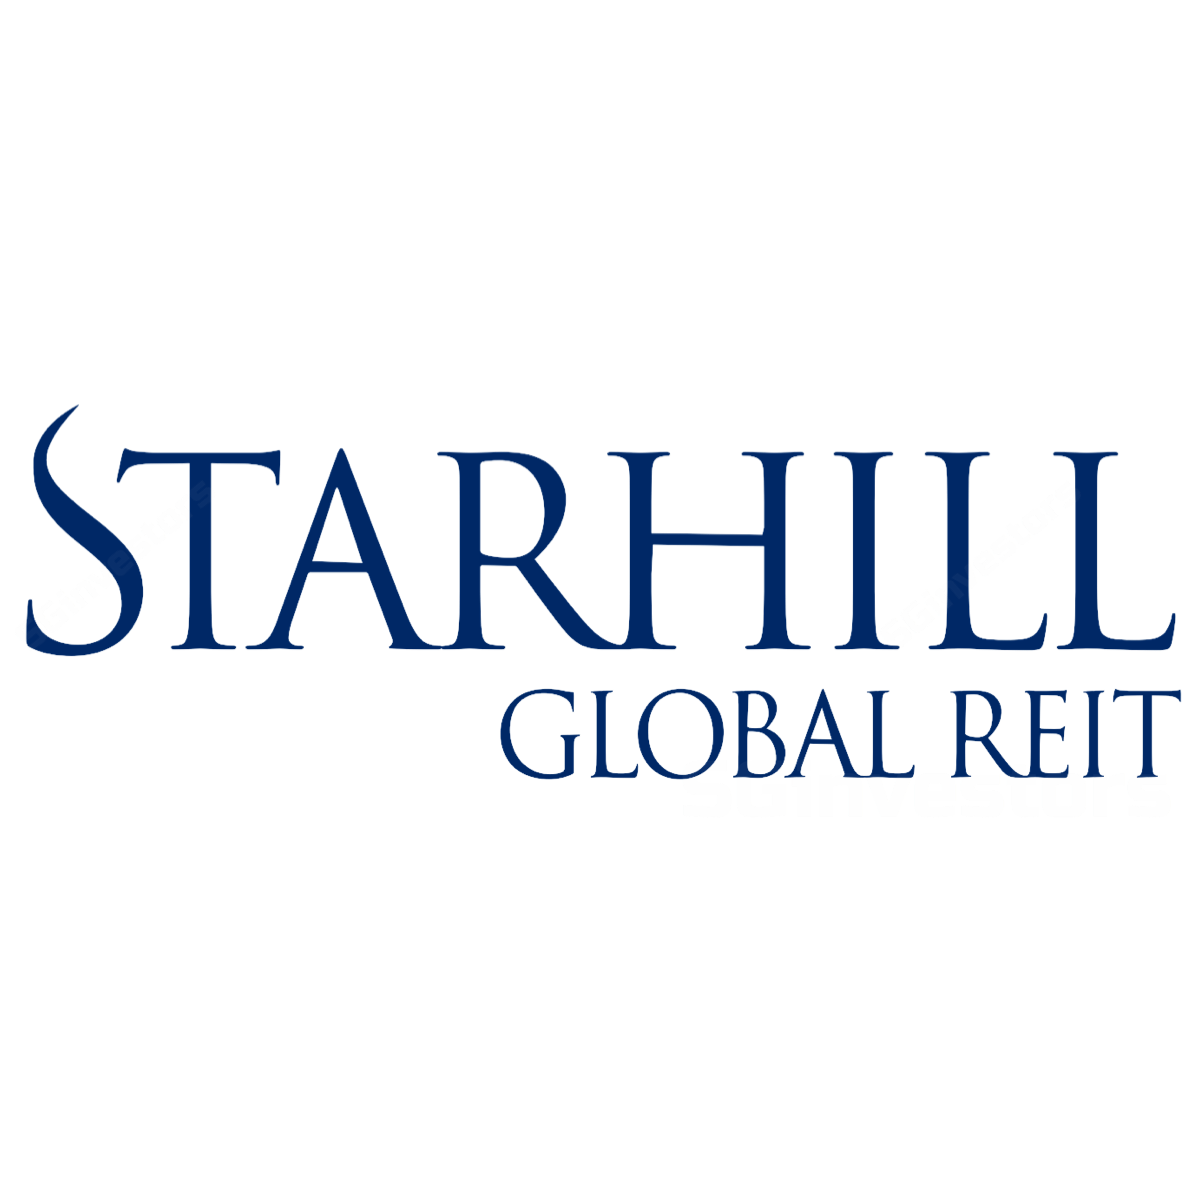 Starhill Global REIT - CIMB Research 2017-07-31: Mixed Performance